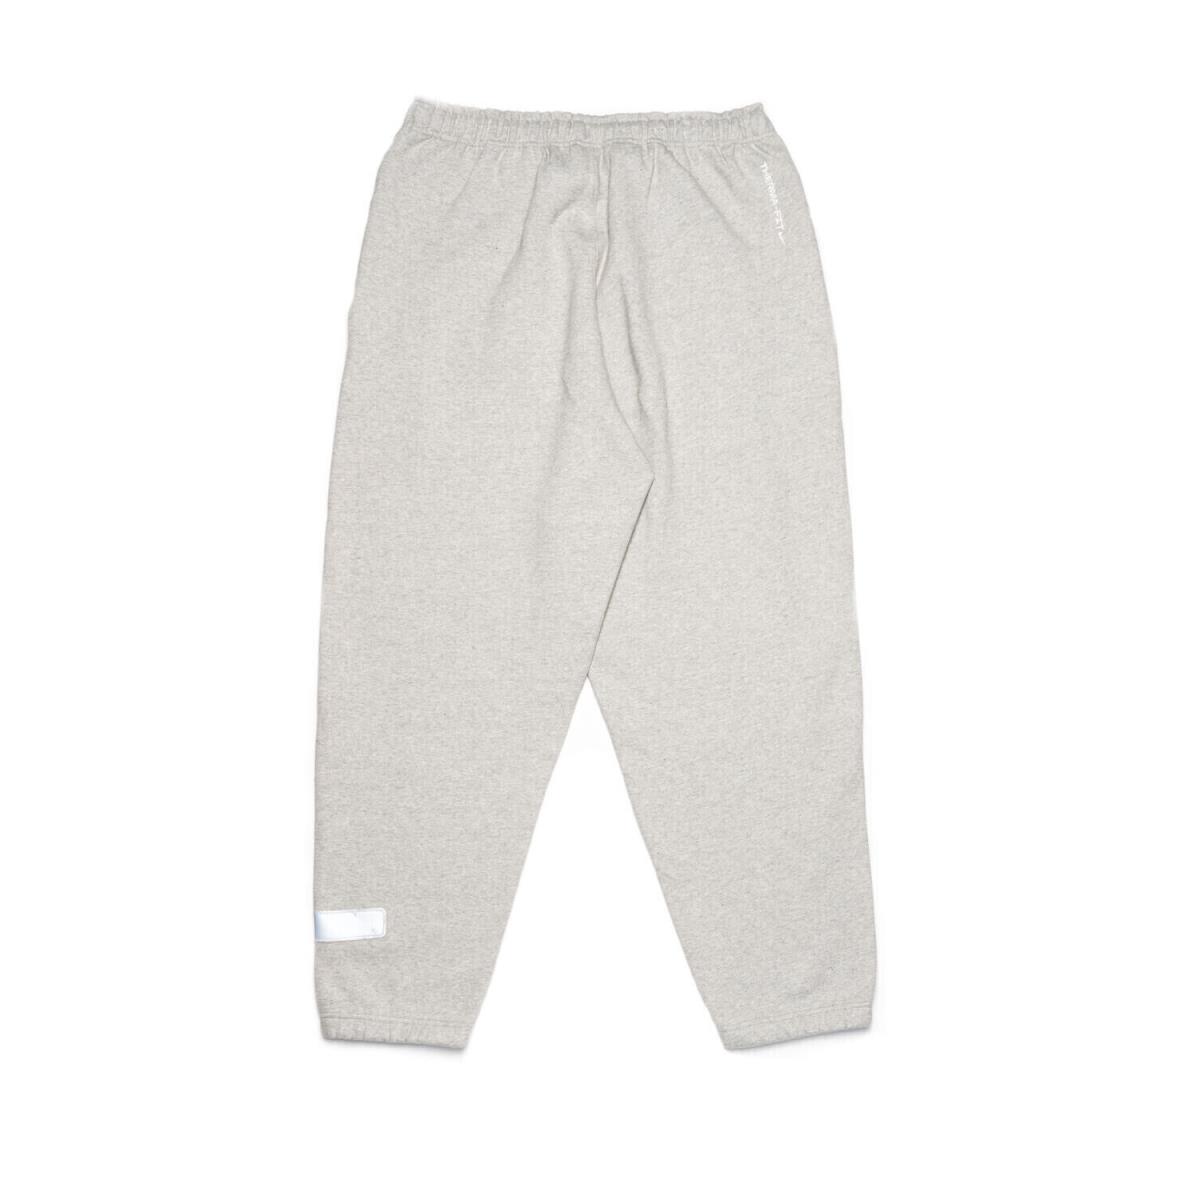 Nike Acg Therma Fit Airora Size 2XL Fleece Pants Grey Joggers DM4246 050